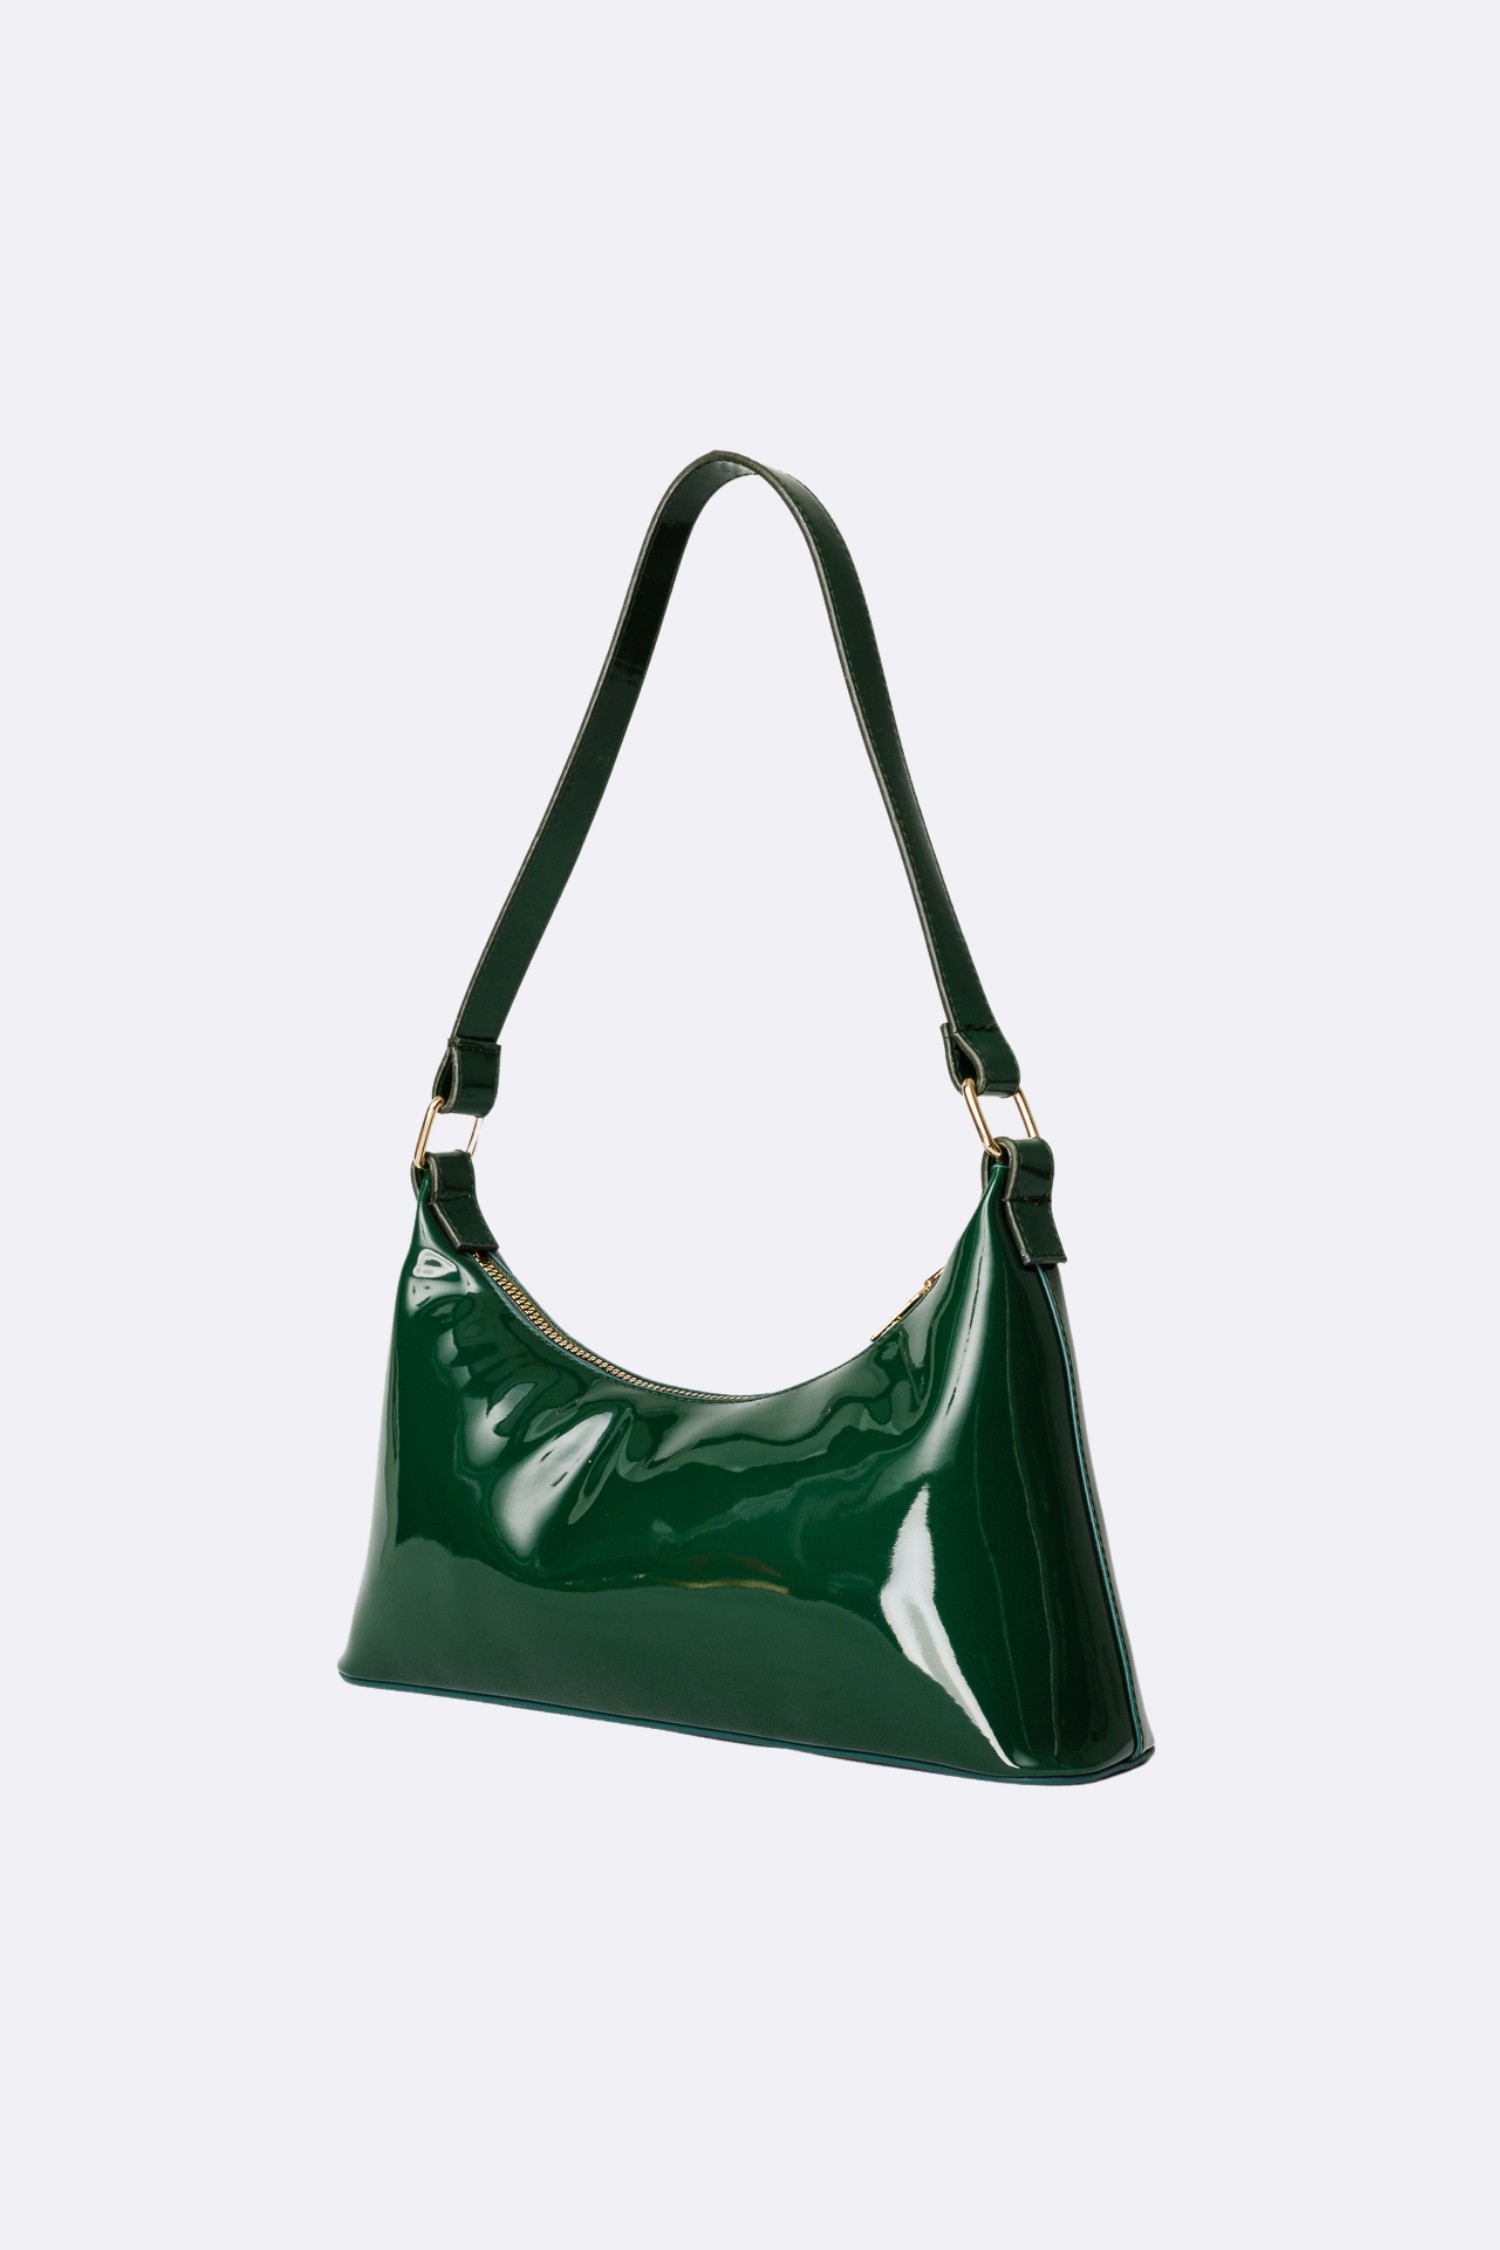 Garden Patent Leather Bag - Benetton Green